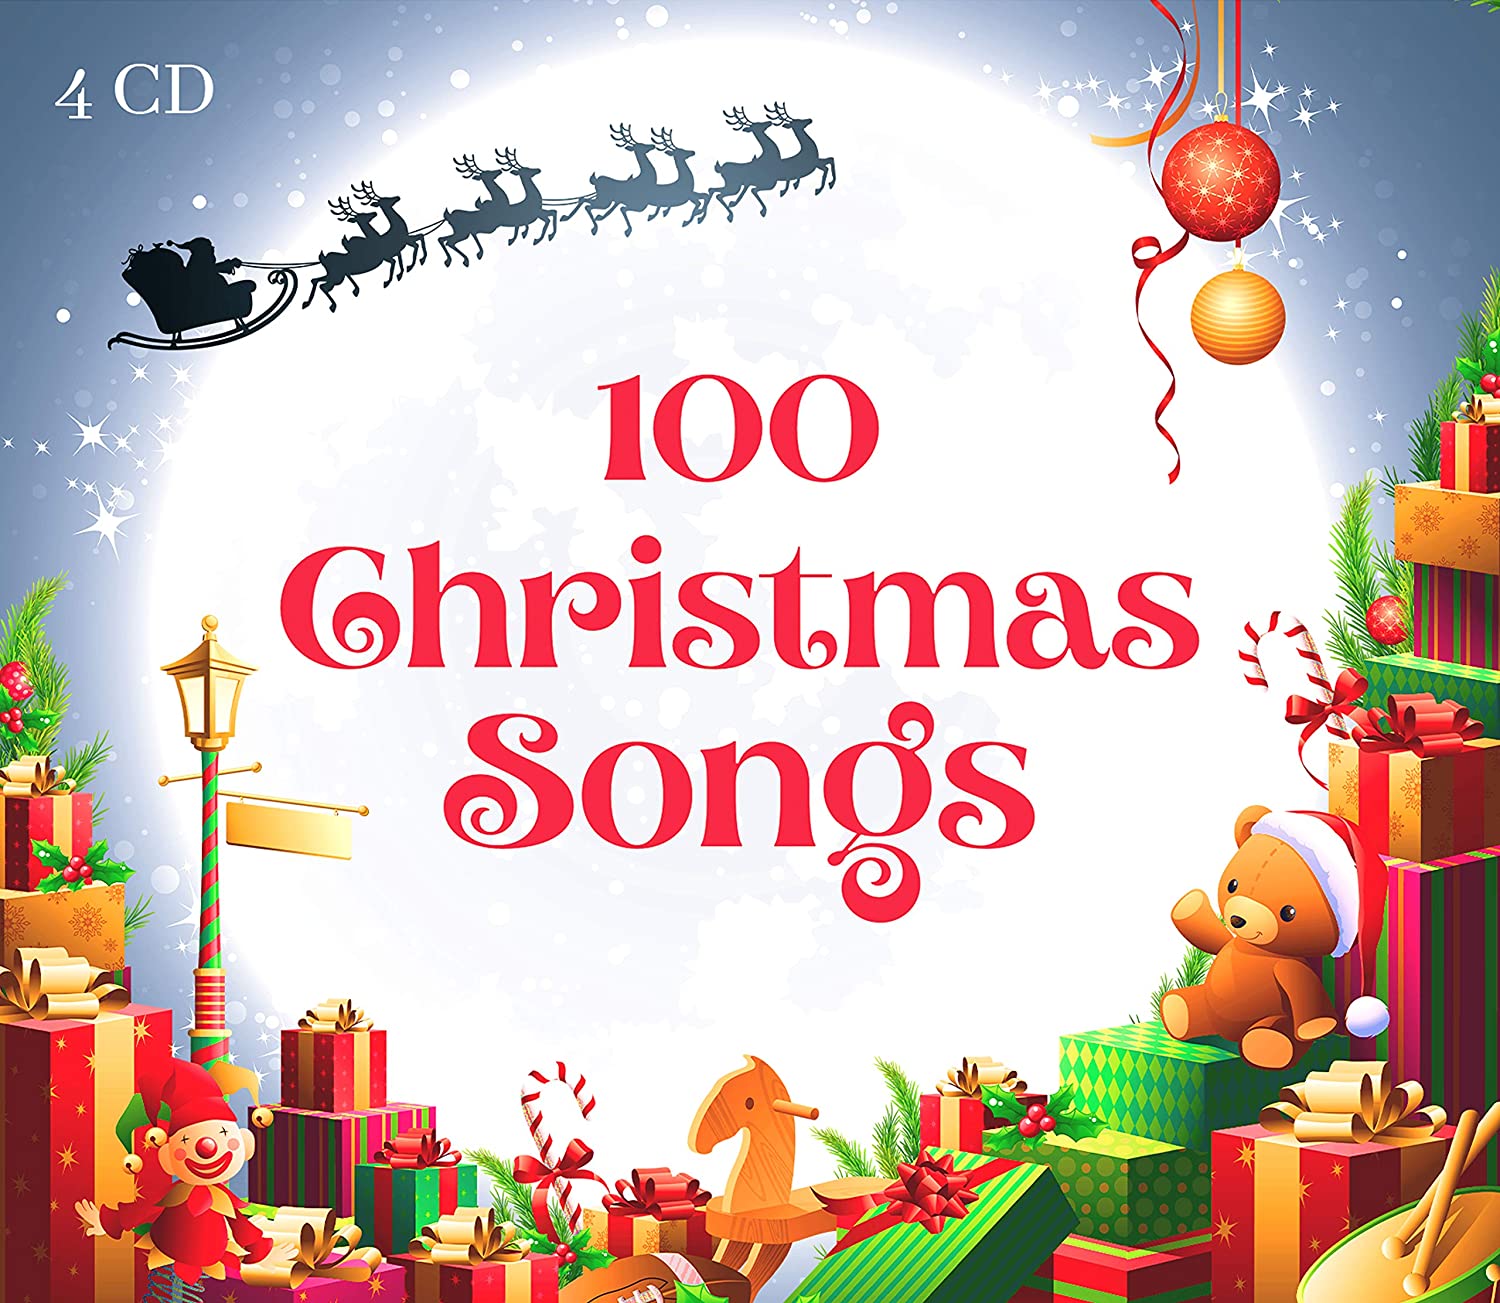 100 Christmas Songs - 4 CD - Le più belle Canzoni di Natale